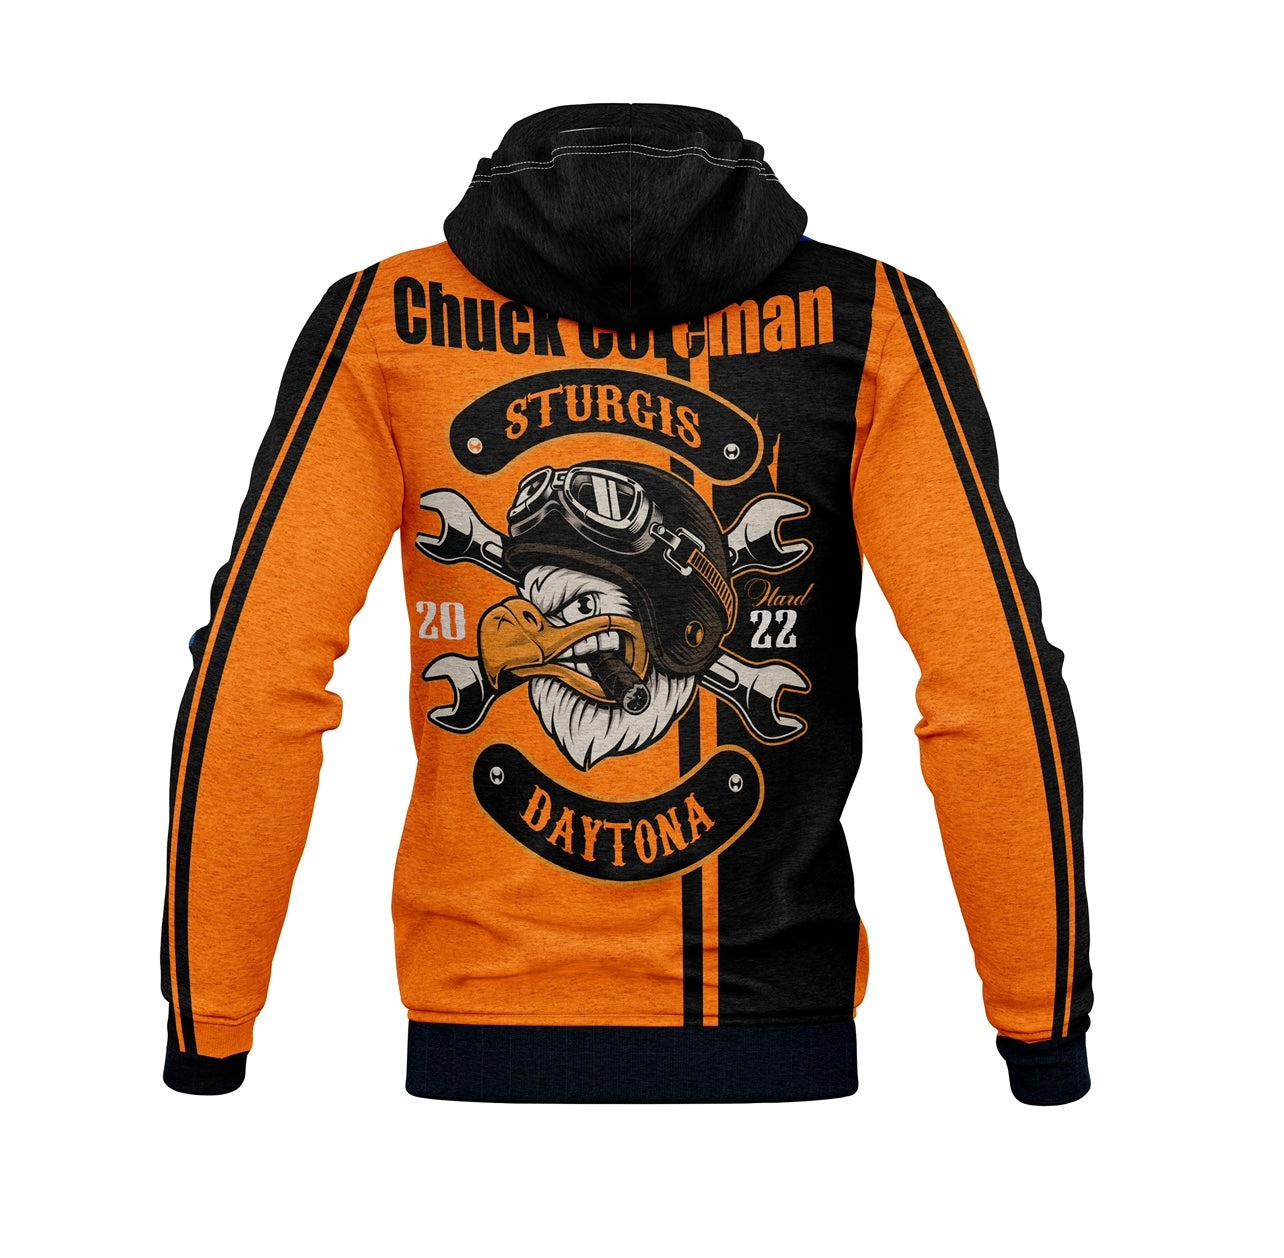 Limited edition biker hoodie Vilma Wear